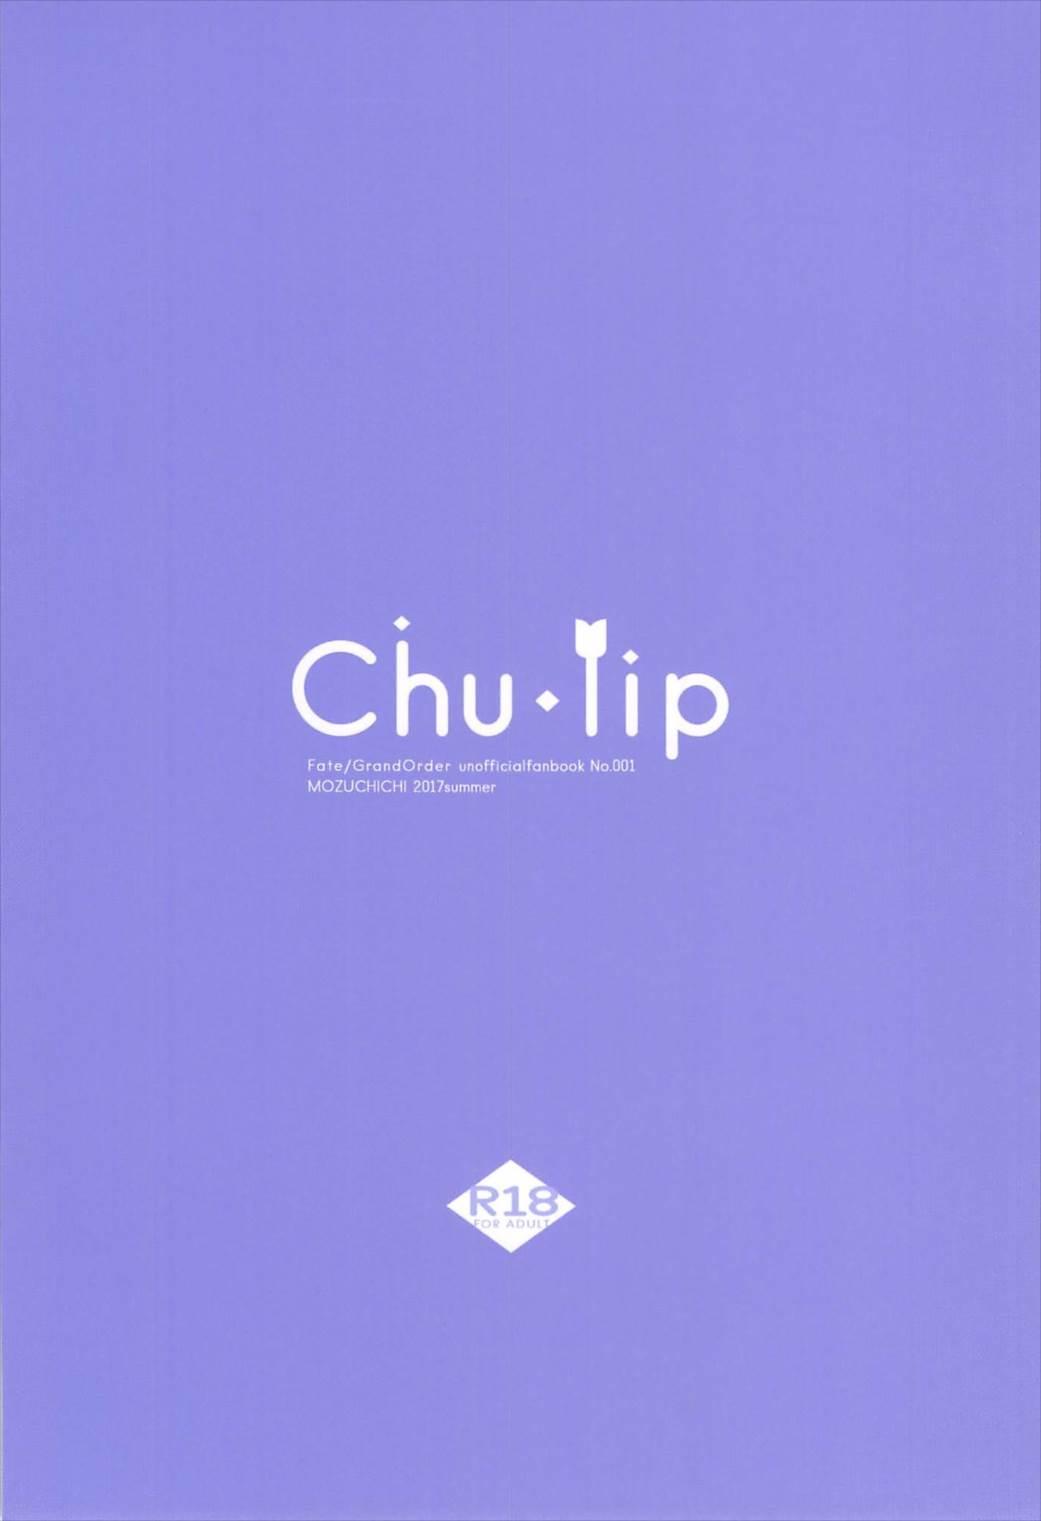 Chu-lip 25